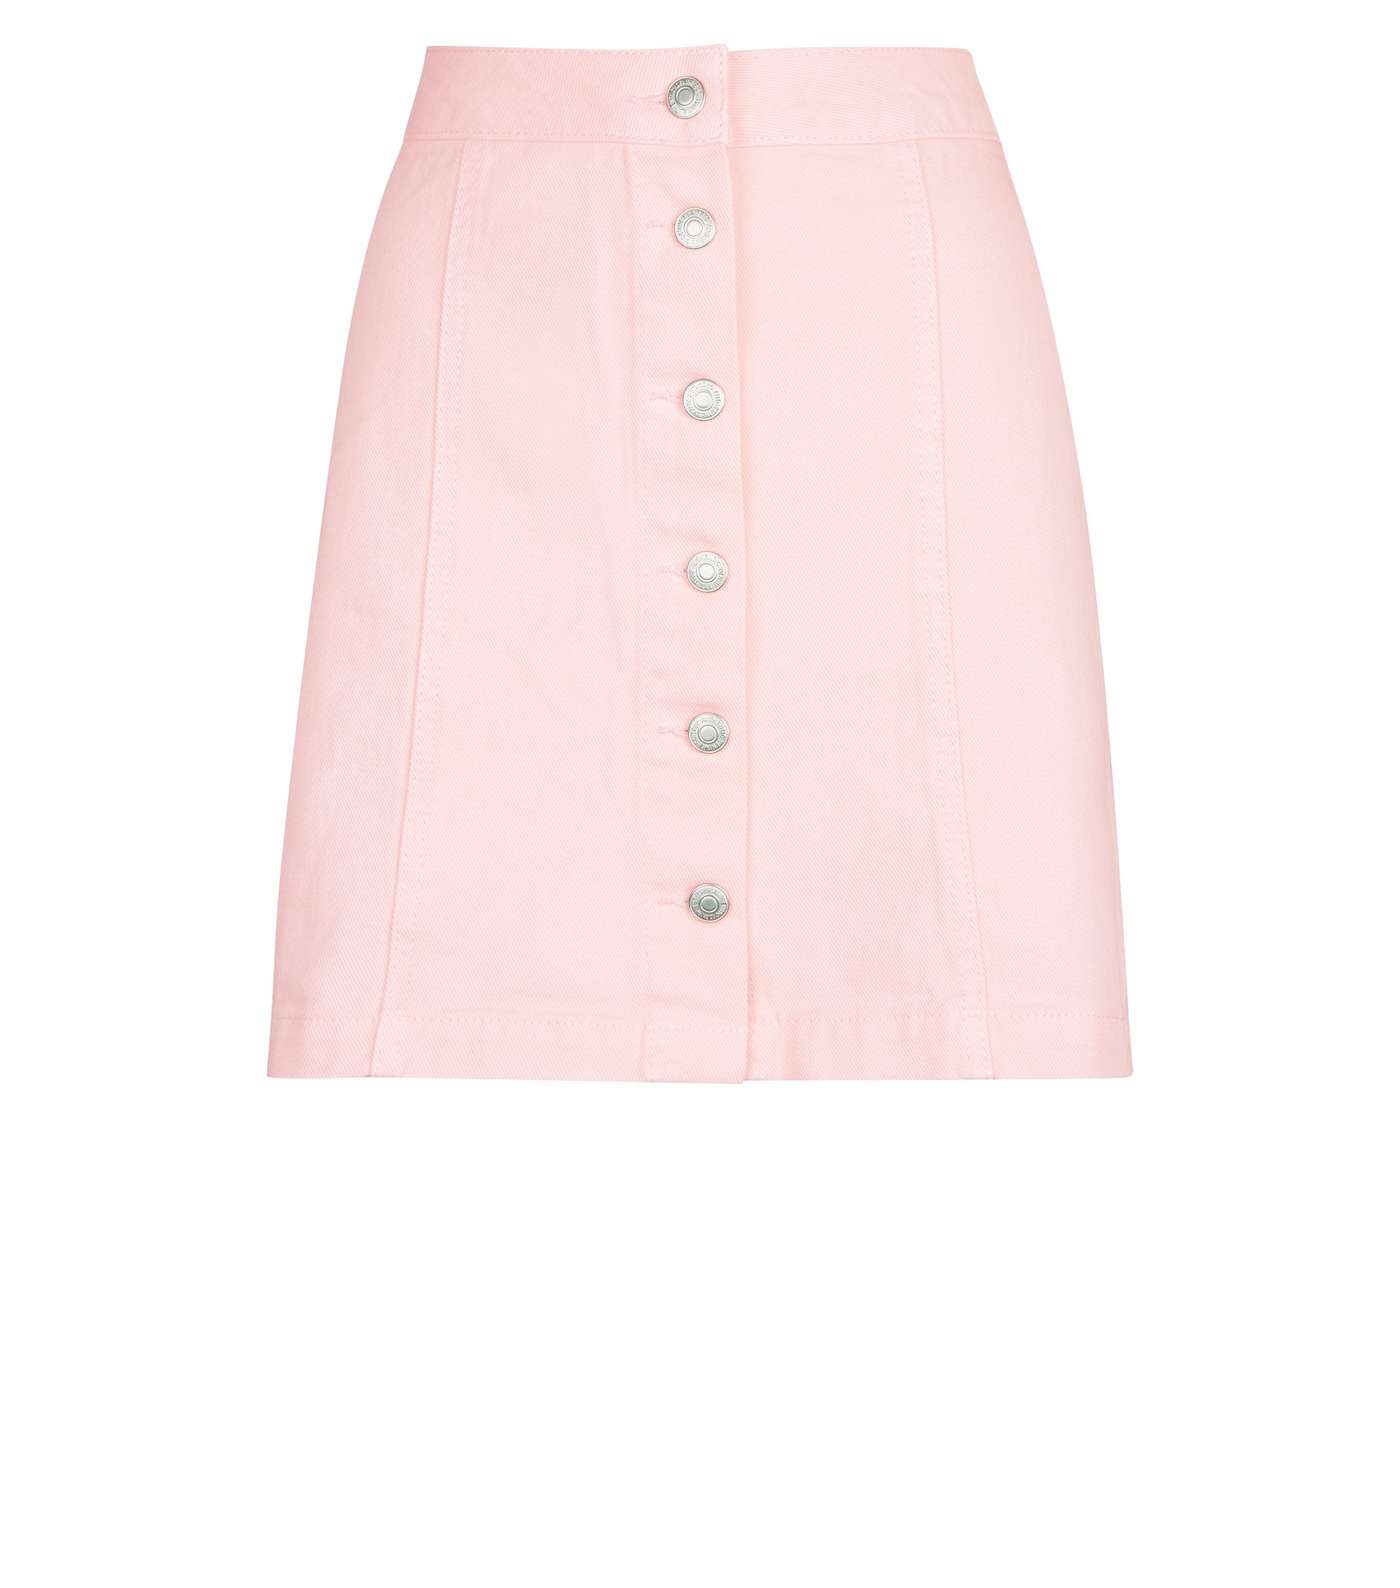 Pink Denim Button Front A-Line Skirt Image 4